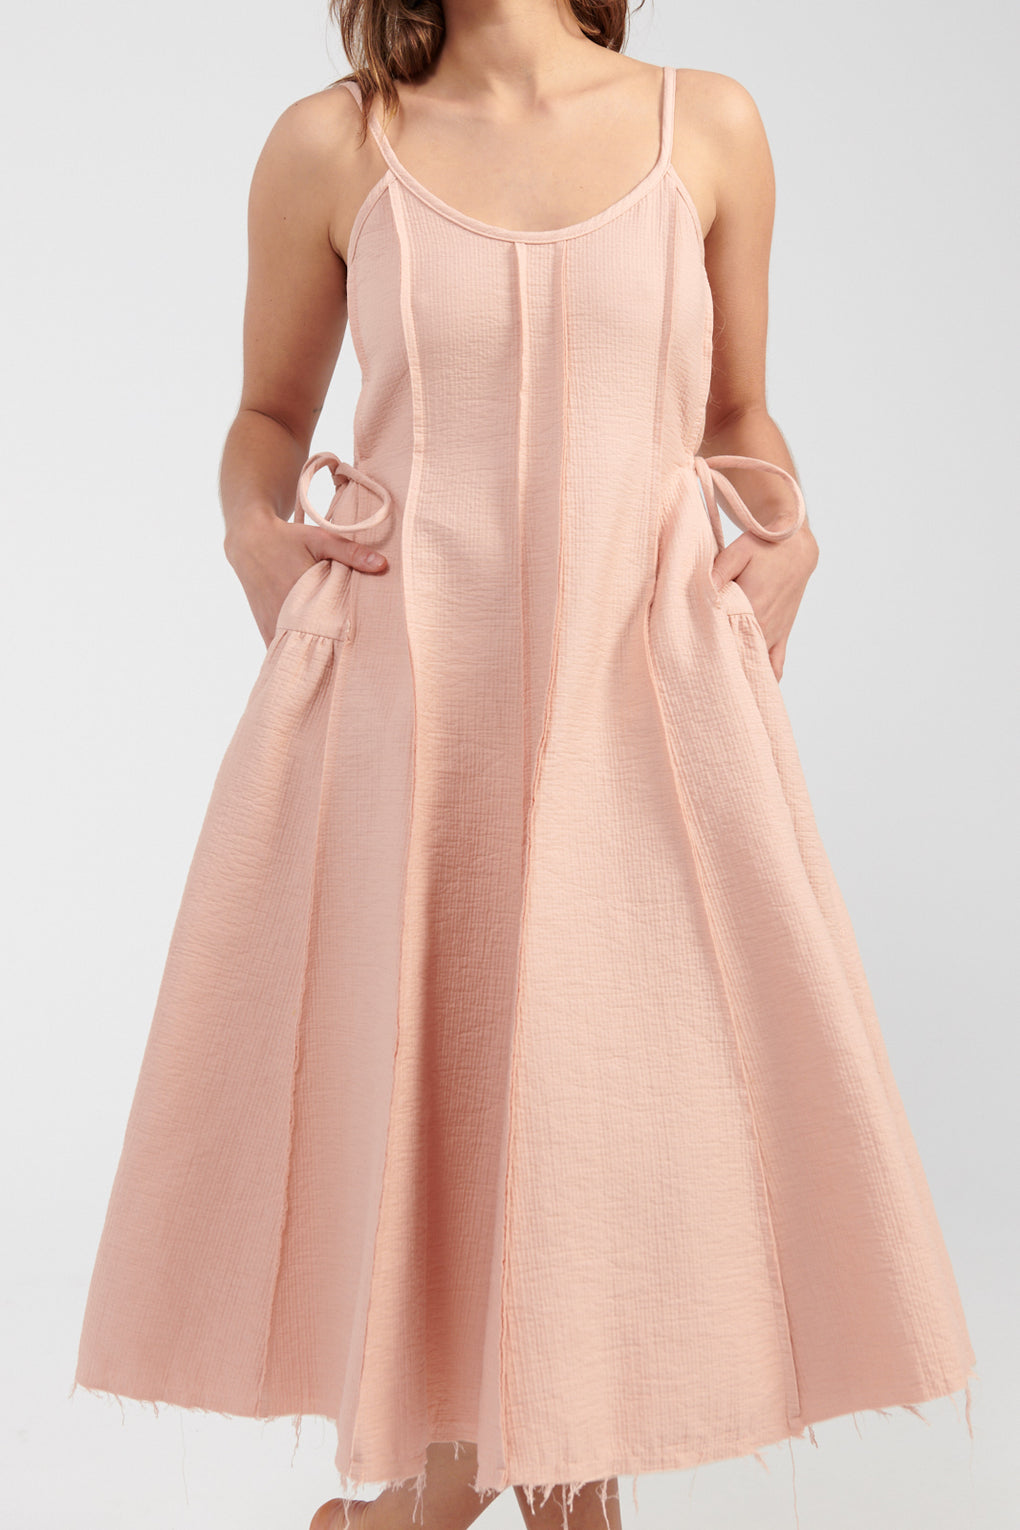 Rachel Comey Madero Dress blush pink-Idun-St. Paul